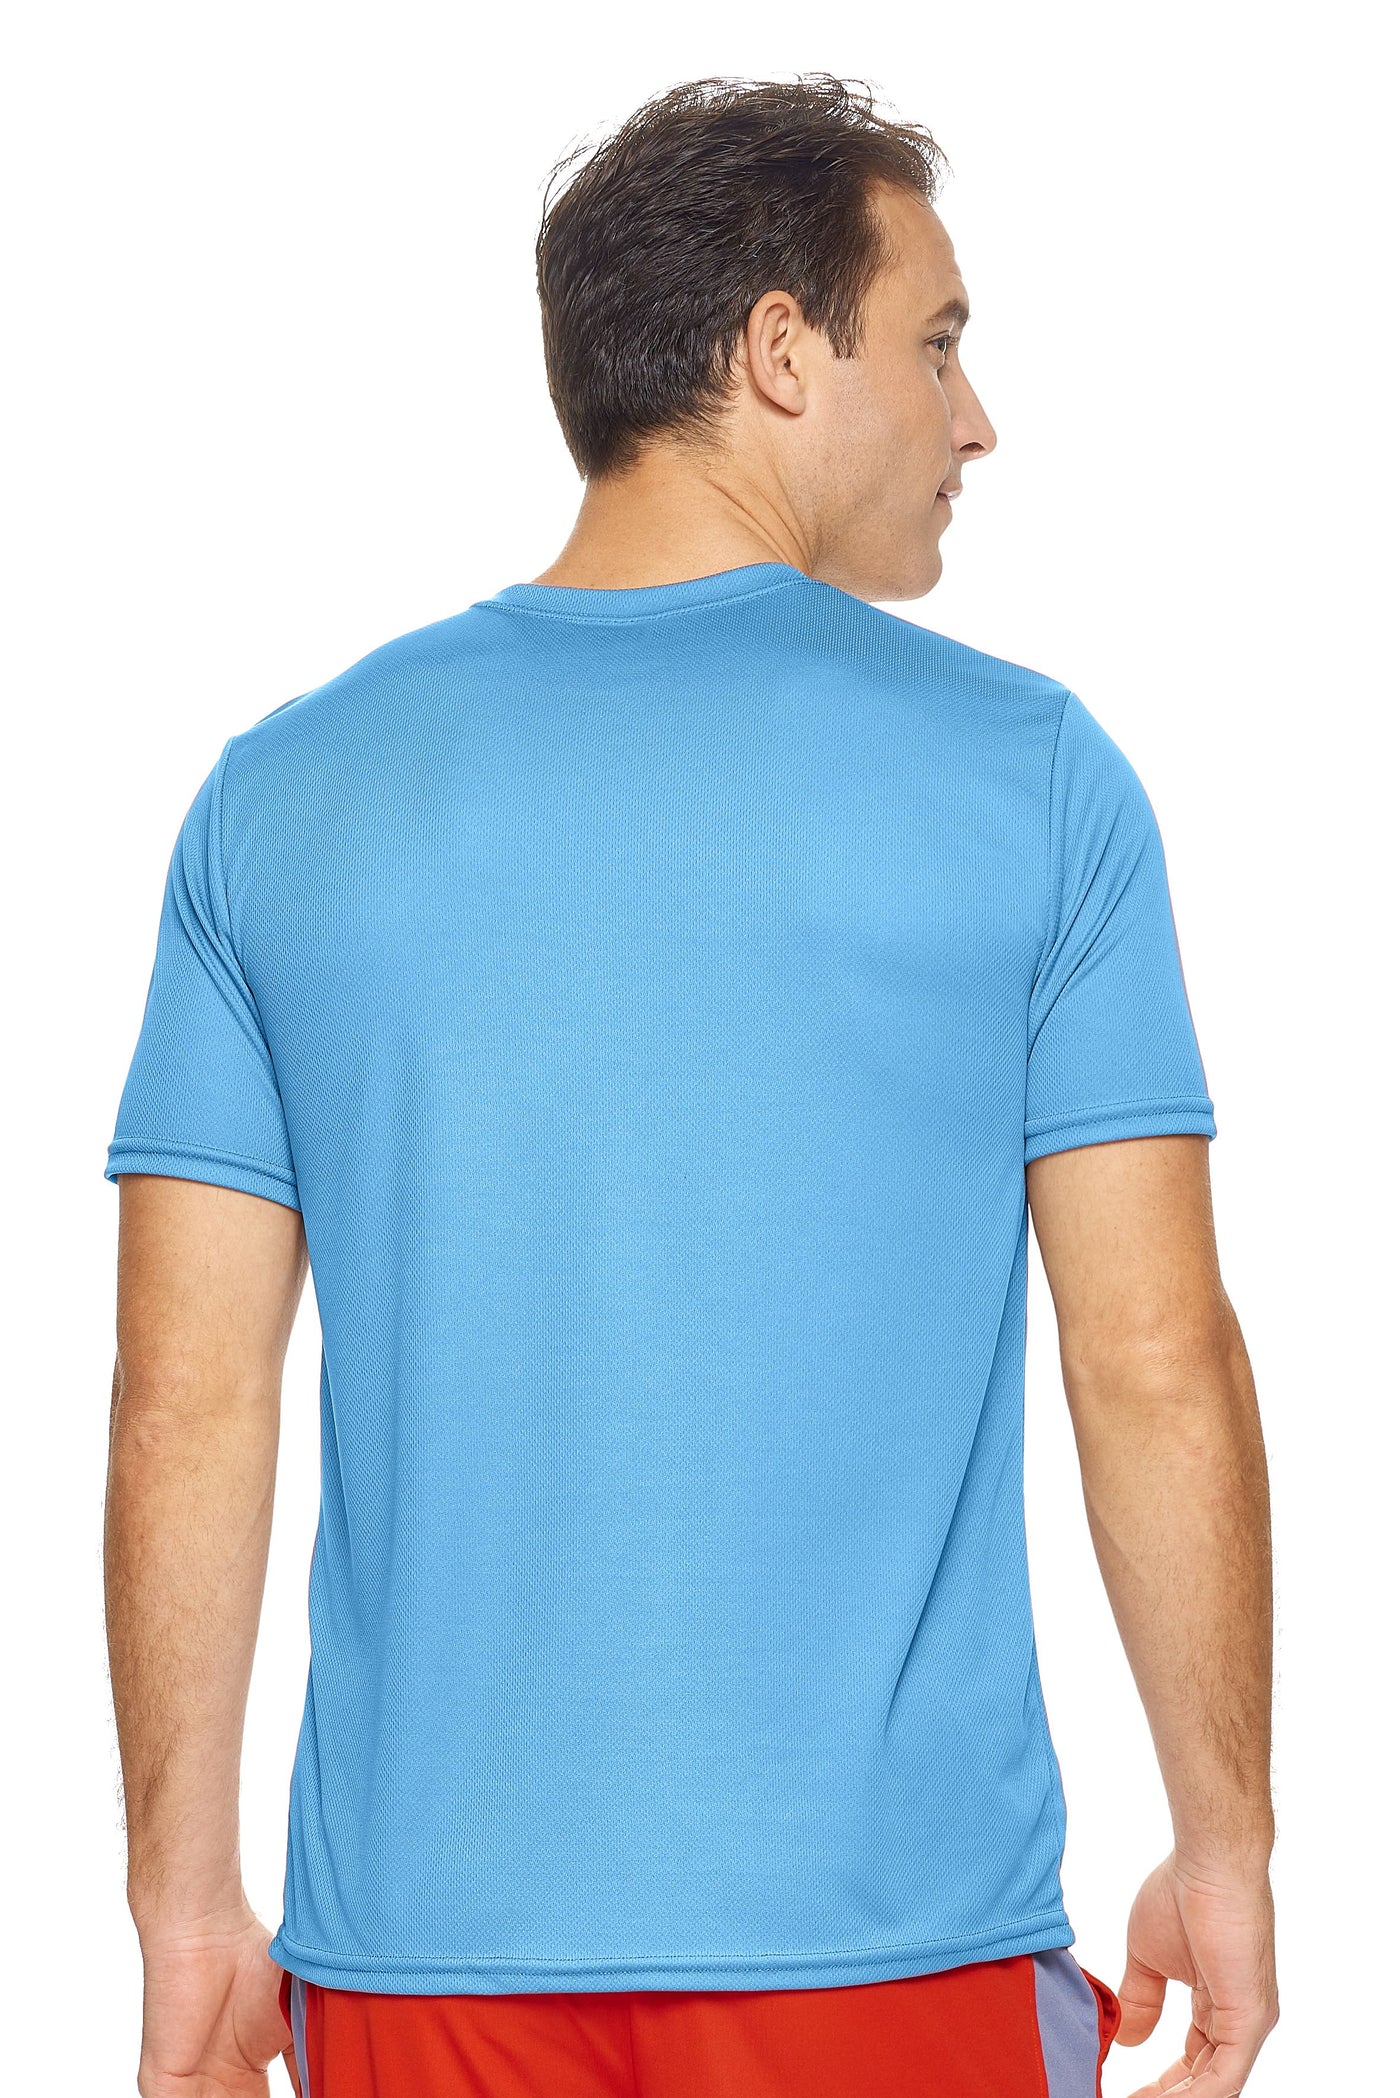 Expert Brand Retail Sportswear Men's Oxymesh Tec Tee Made in USA activewear carolina blue 3#color_carolina-blue